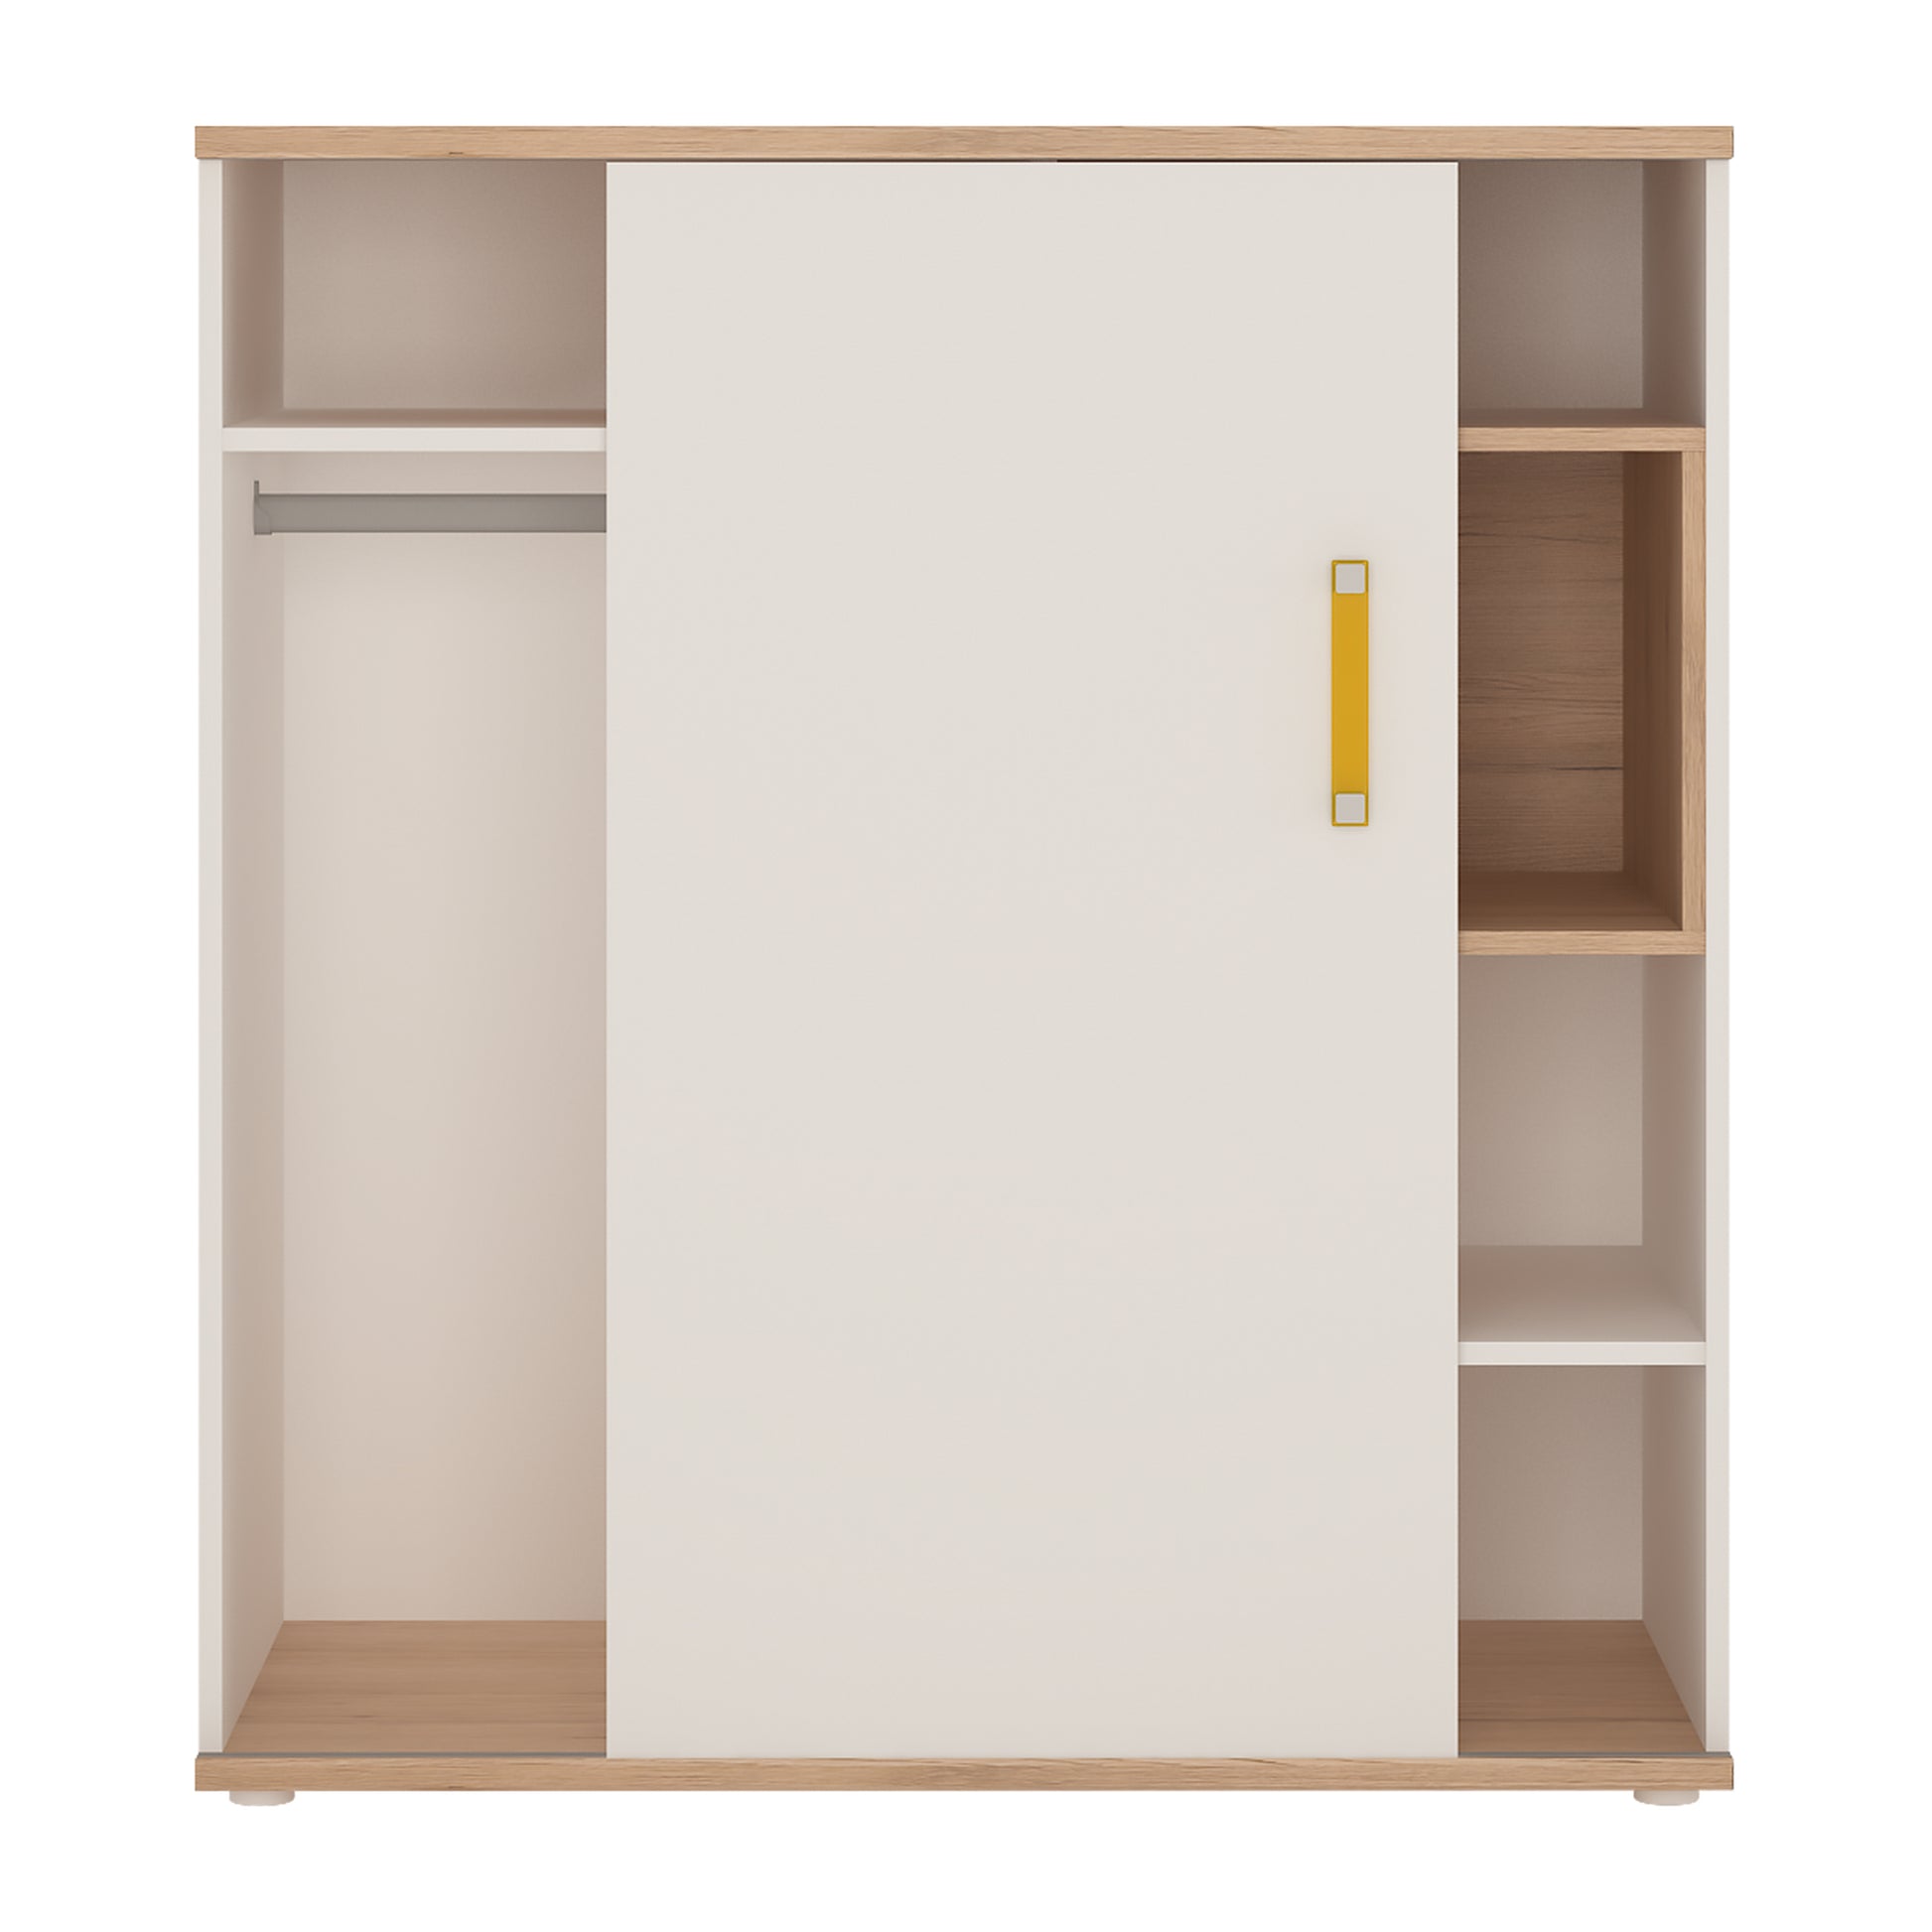 4Kids  Low Cabinet with shelves (Sliding Door) in Light Oak and white High Gloss (orange handles)